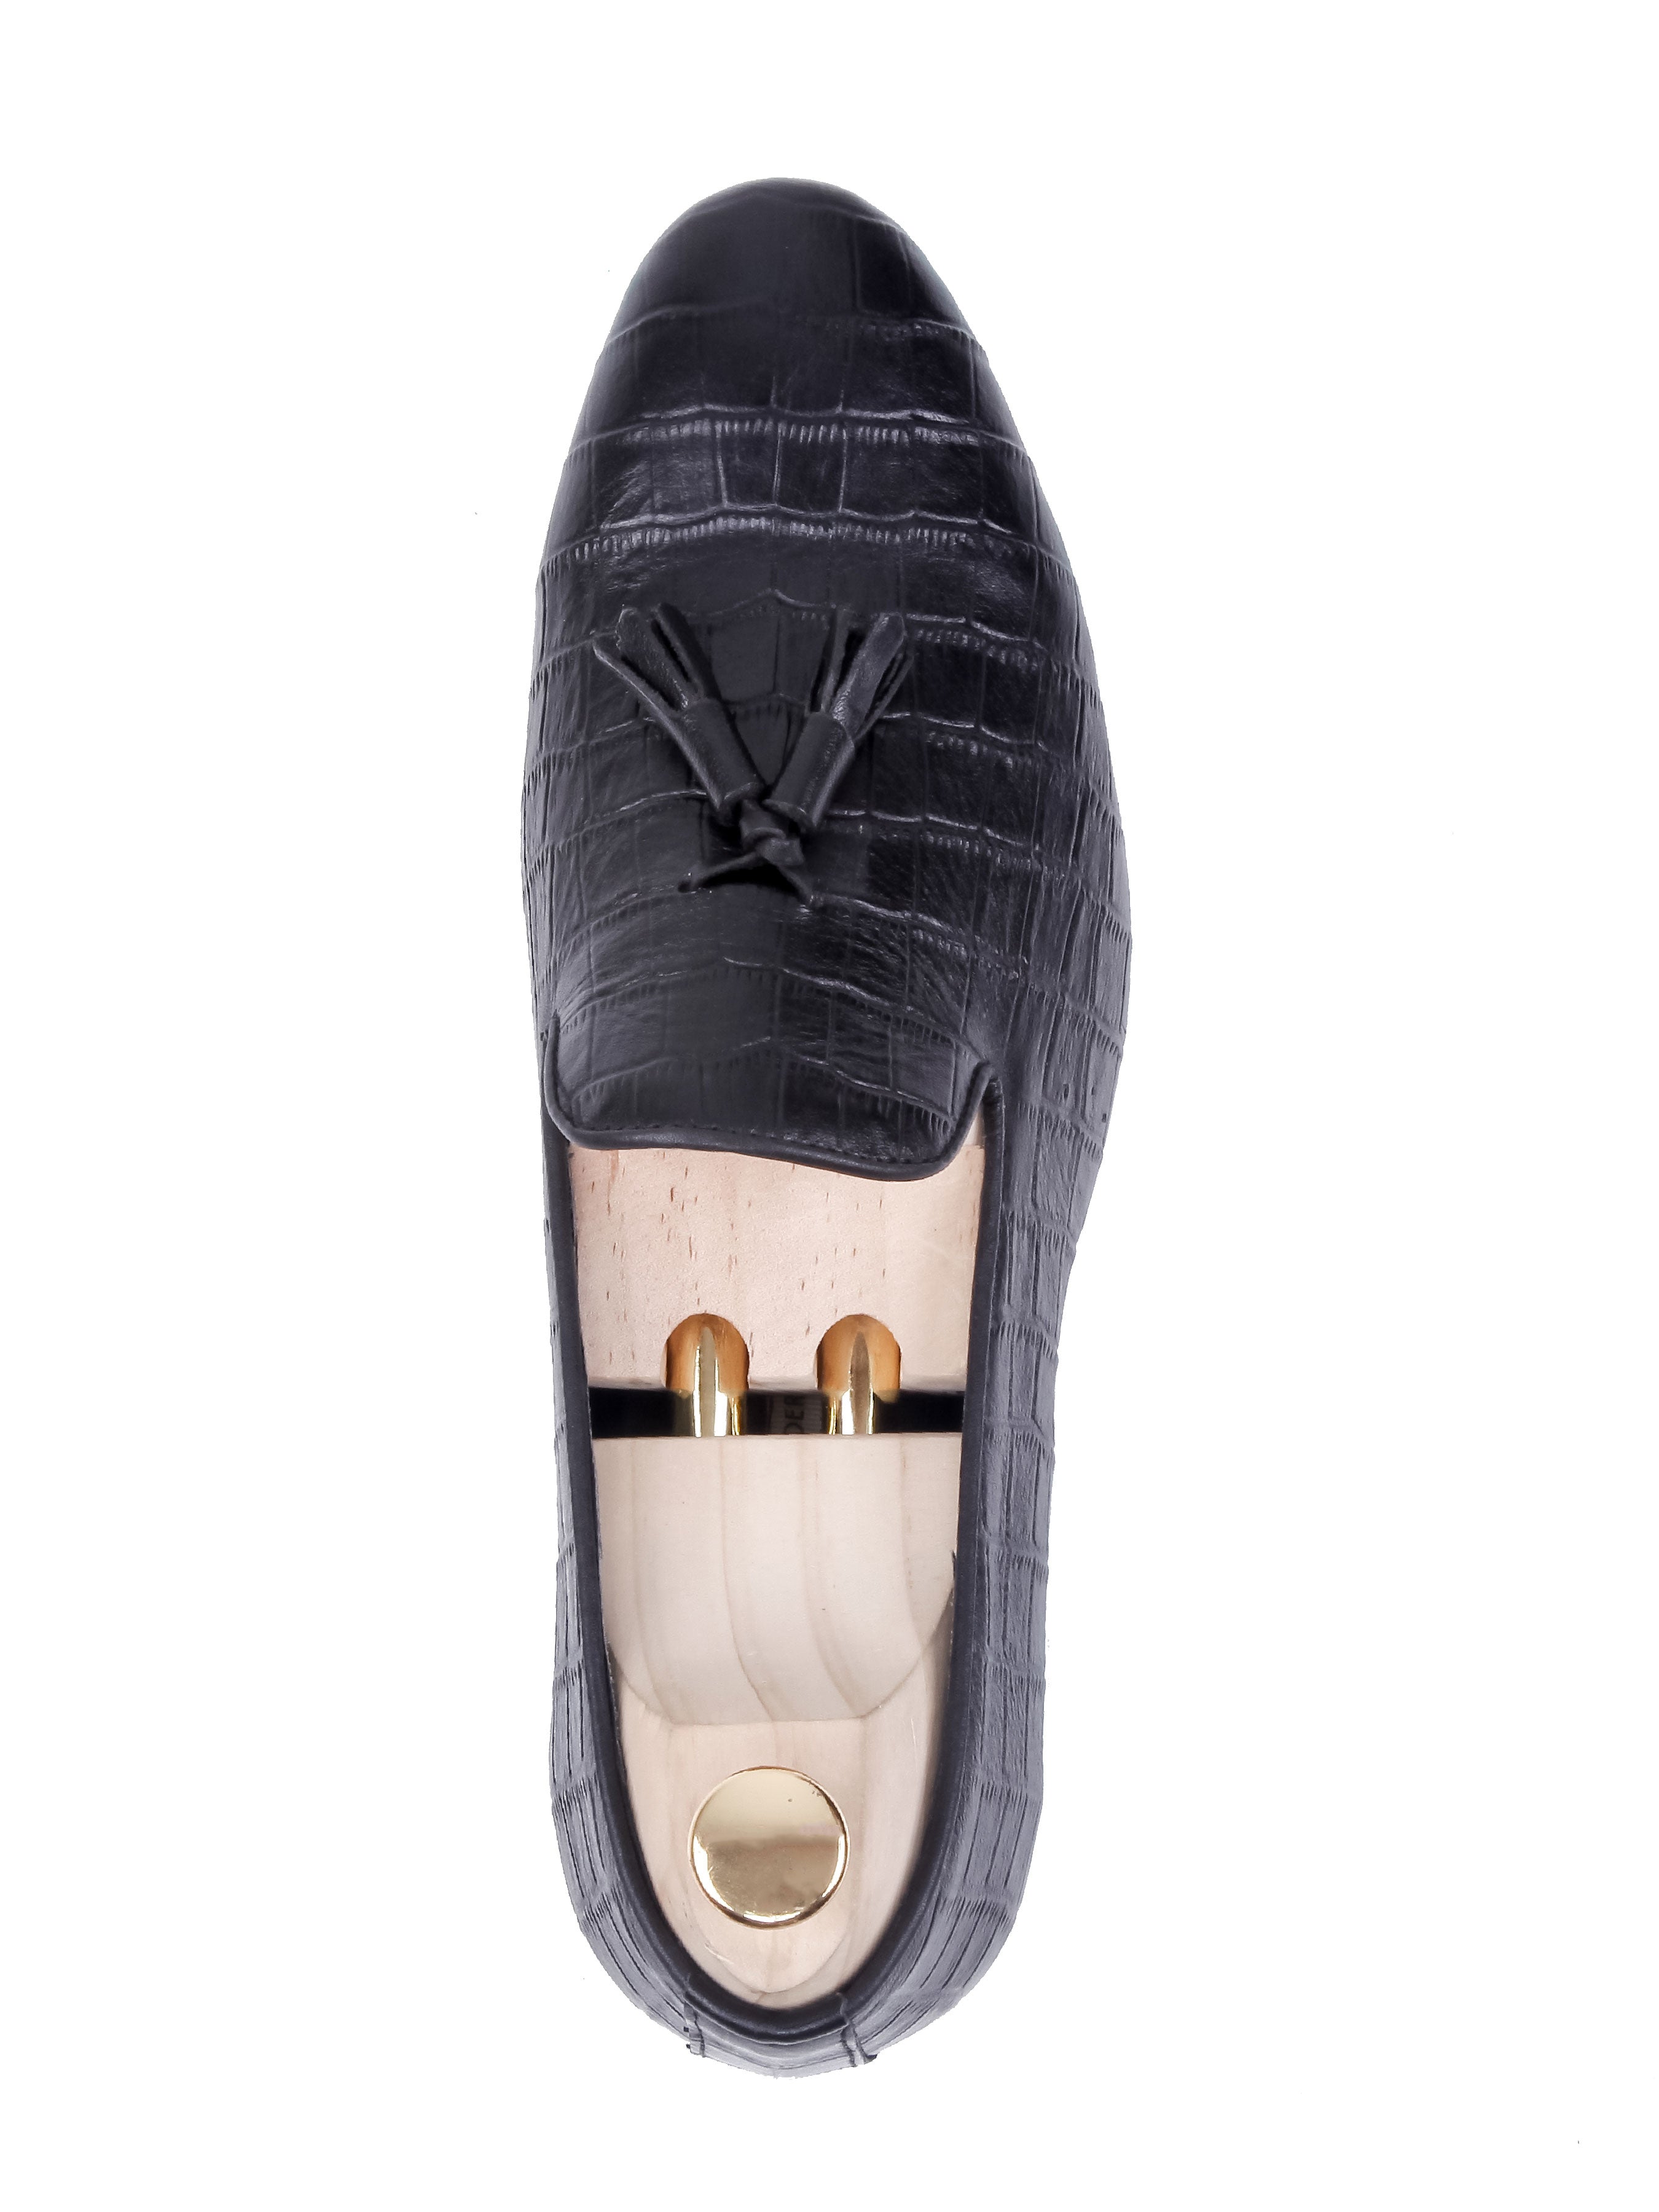 Loafer Slipper - Black Croco Leather - Zeve Shoes